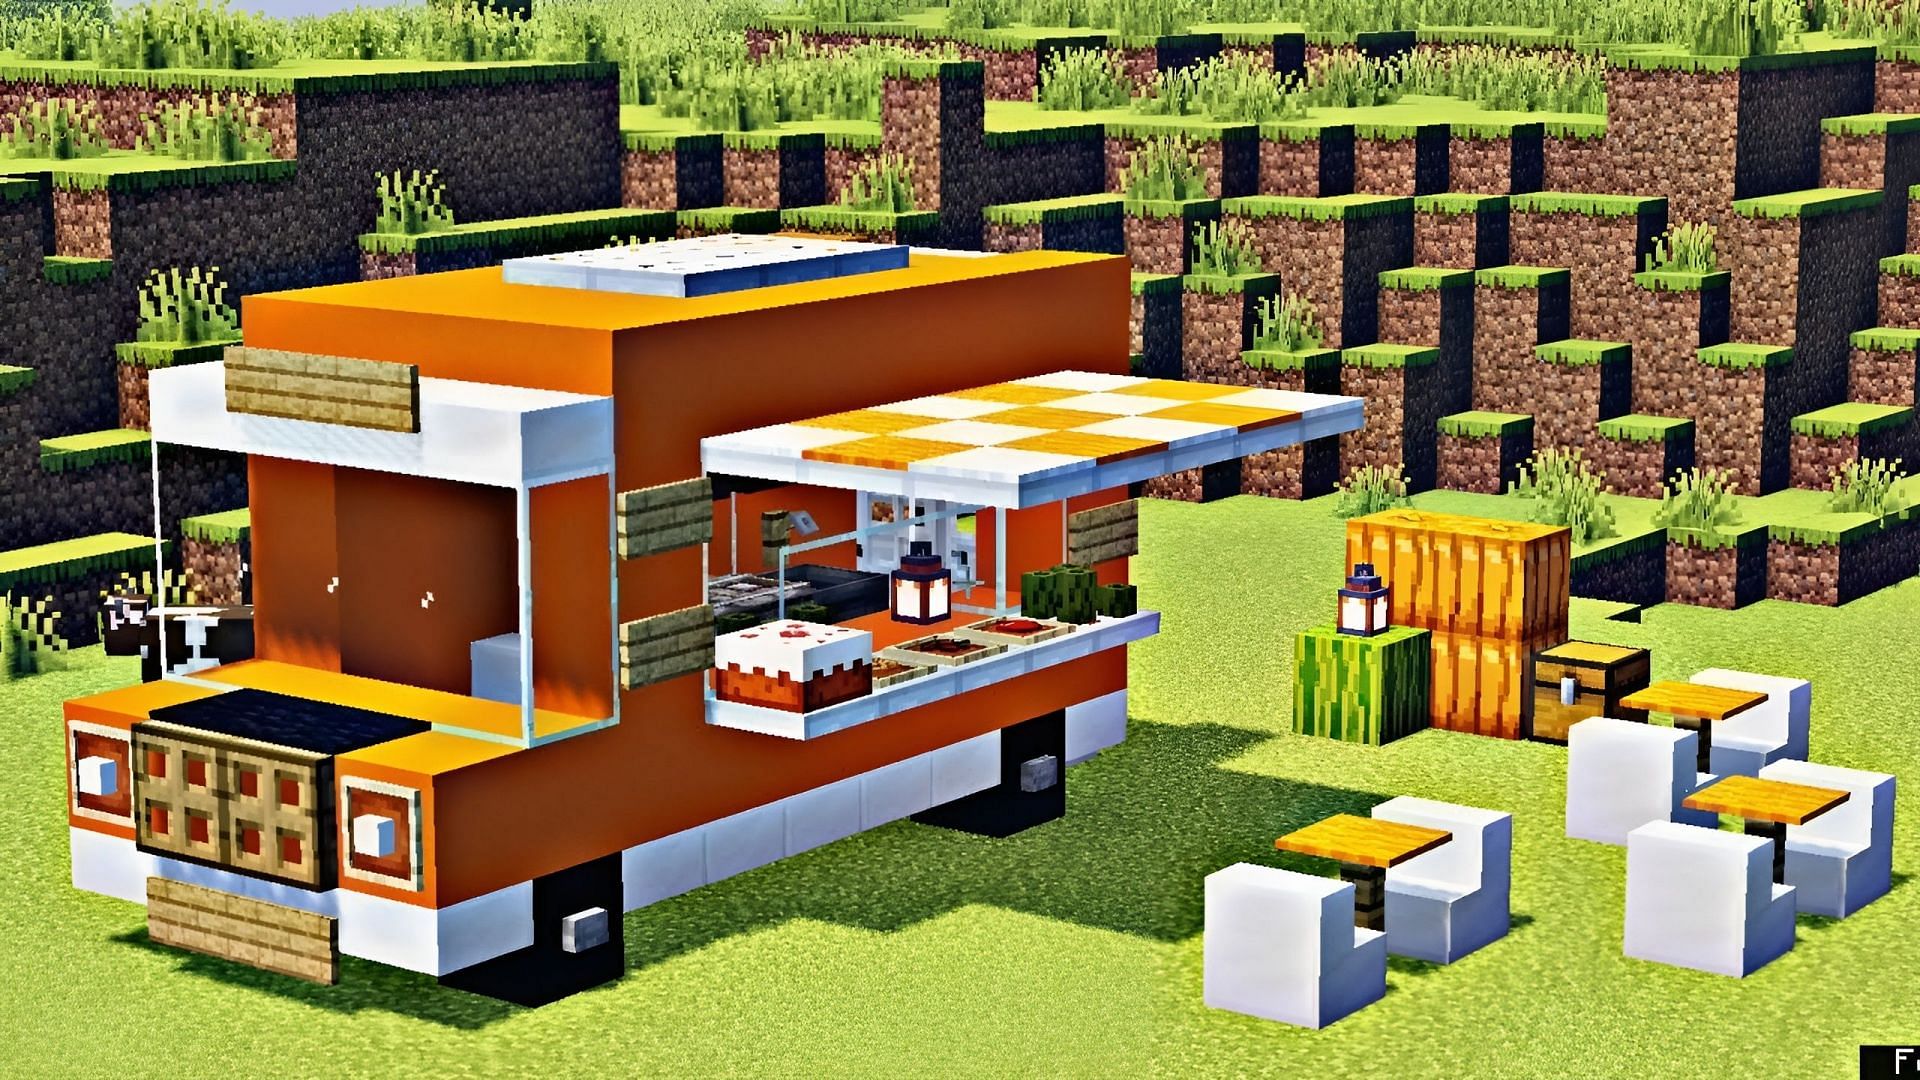 Food trucks are unique Minecraft builds (Image via Youtube/Games Ada